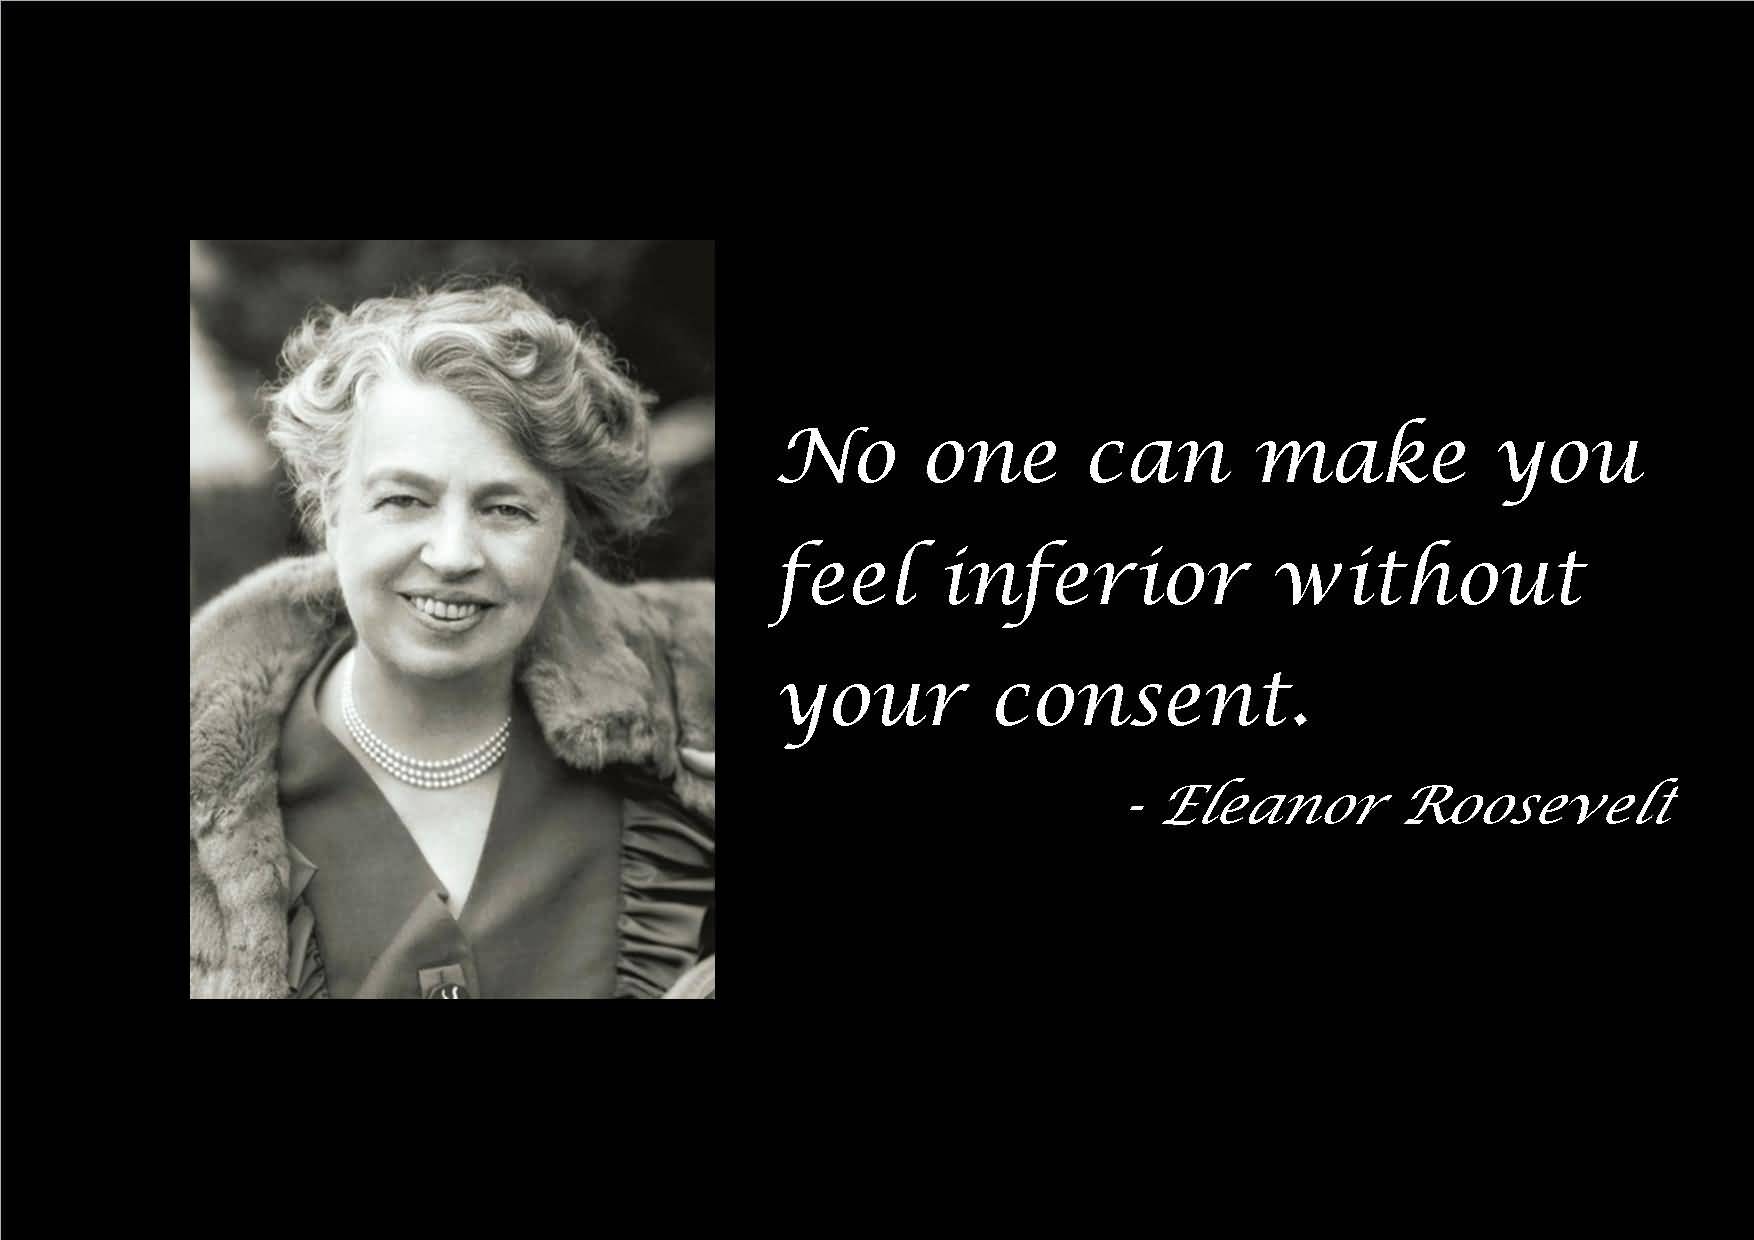 Eleanor Roosevelt Quote Meme Image 06